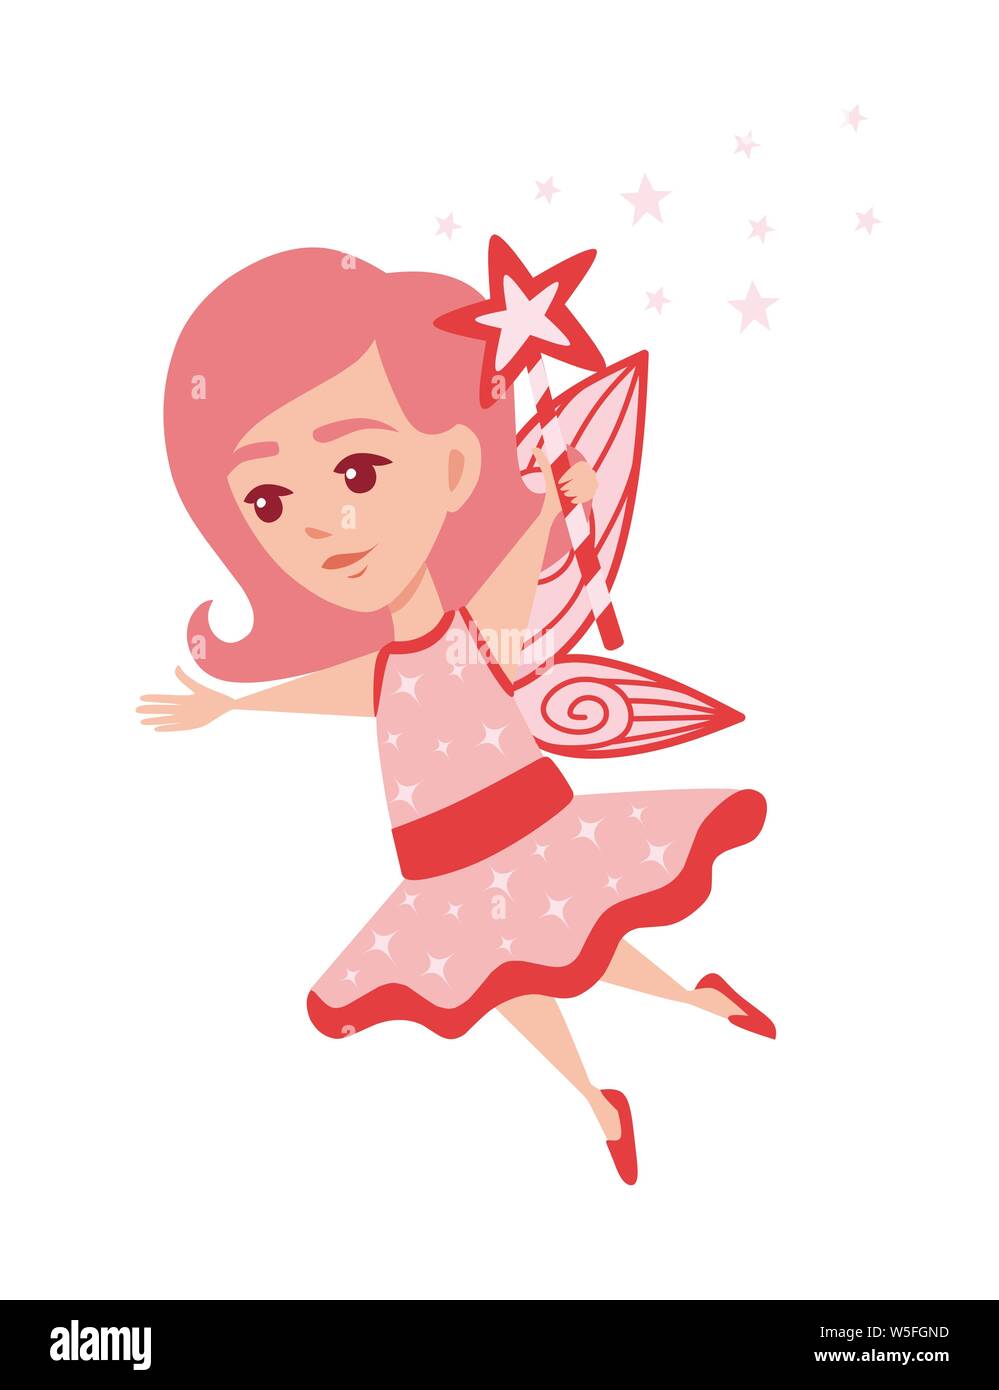 Flying butterfly Fairy mit Stern Zauberstab und tragen rosa Kleidung Cartoon Character Design flachbild Vector Illustration. Stock Vektor